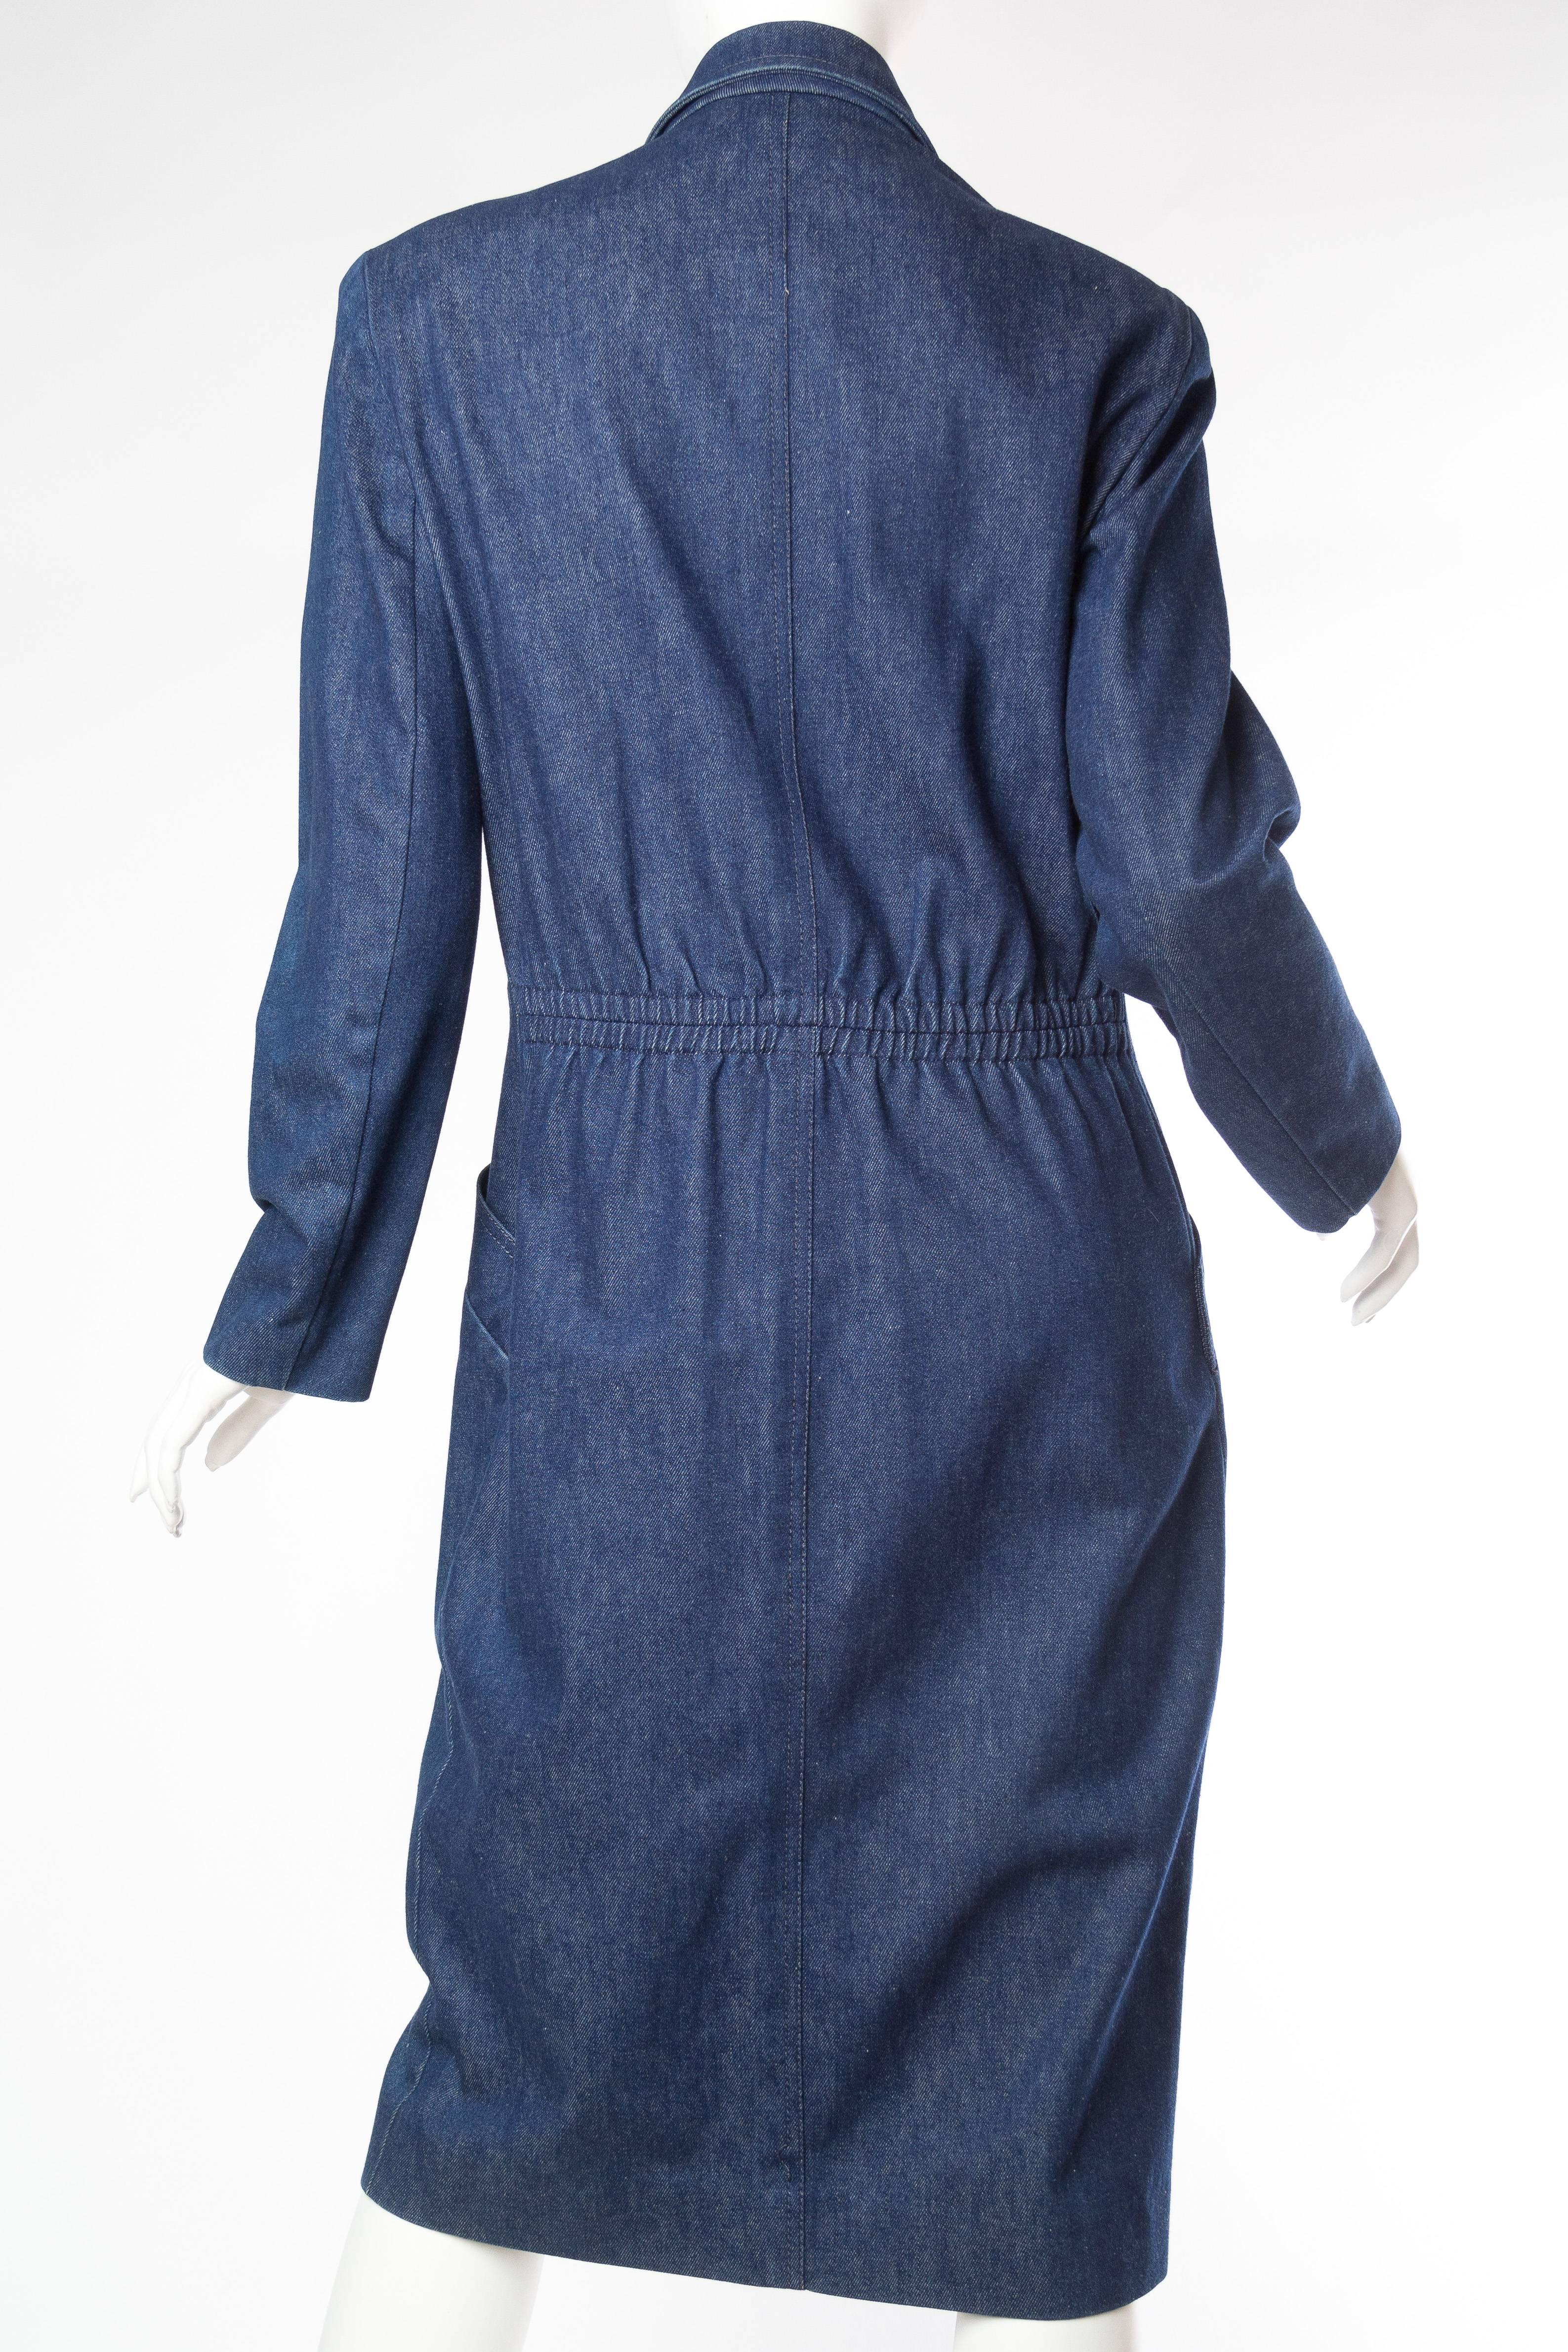 1980S DONNA KARAN Indigo Blue Denim Zip Front Dress In Excellent Condition For Sale In New York, NY